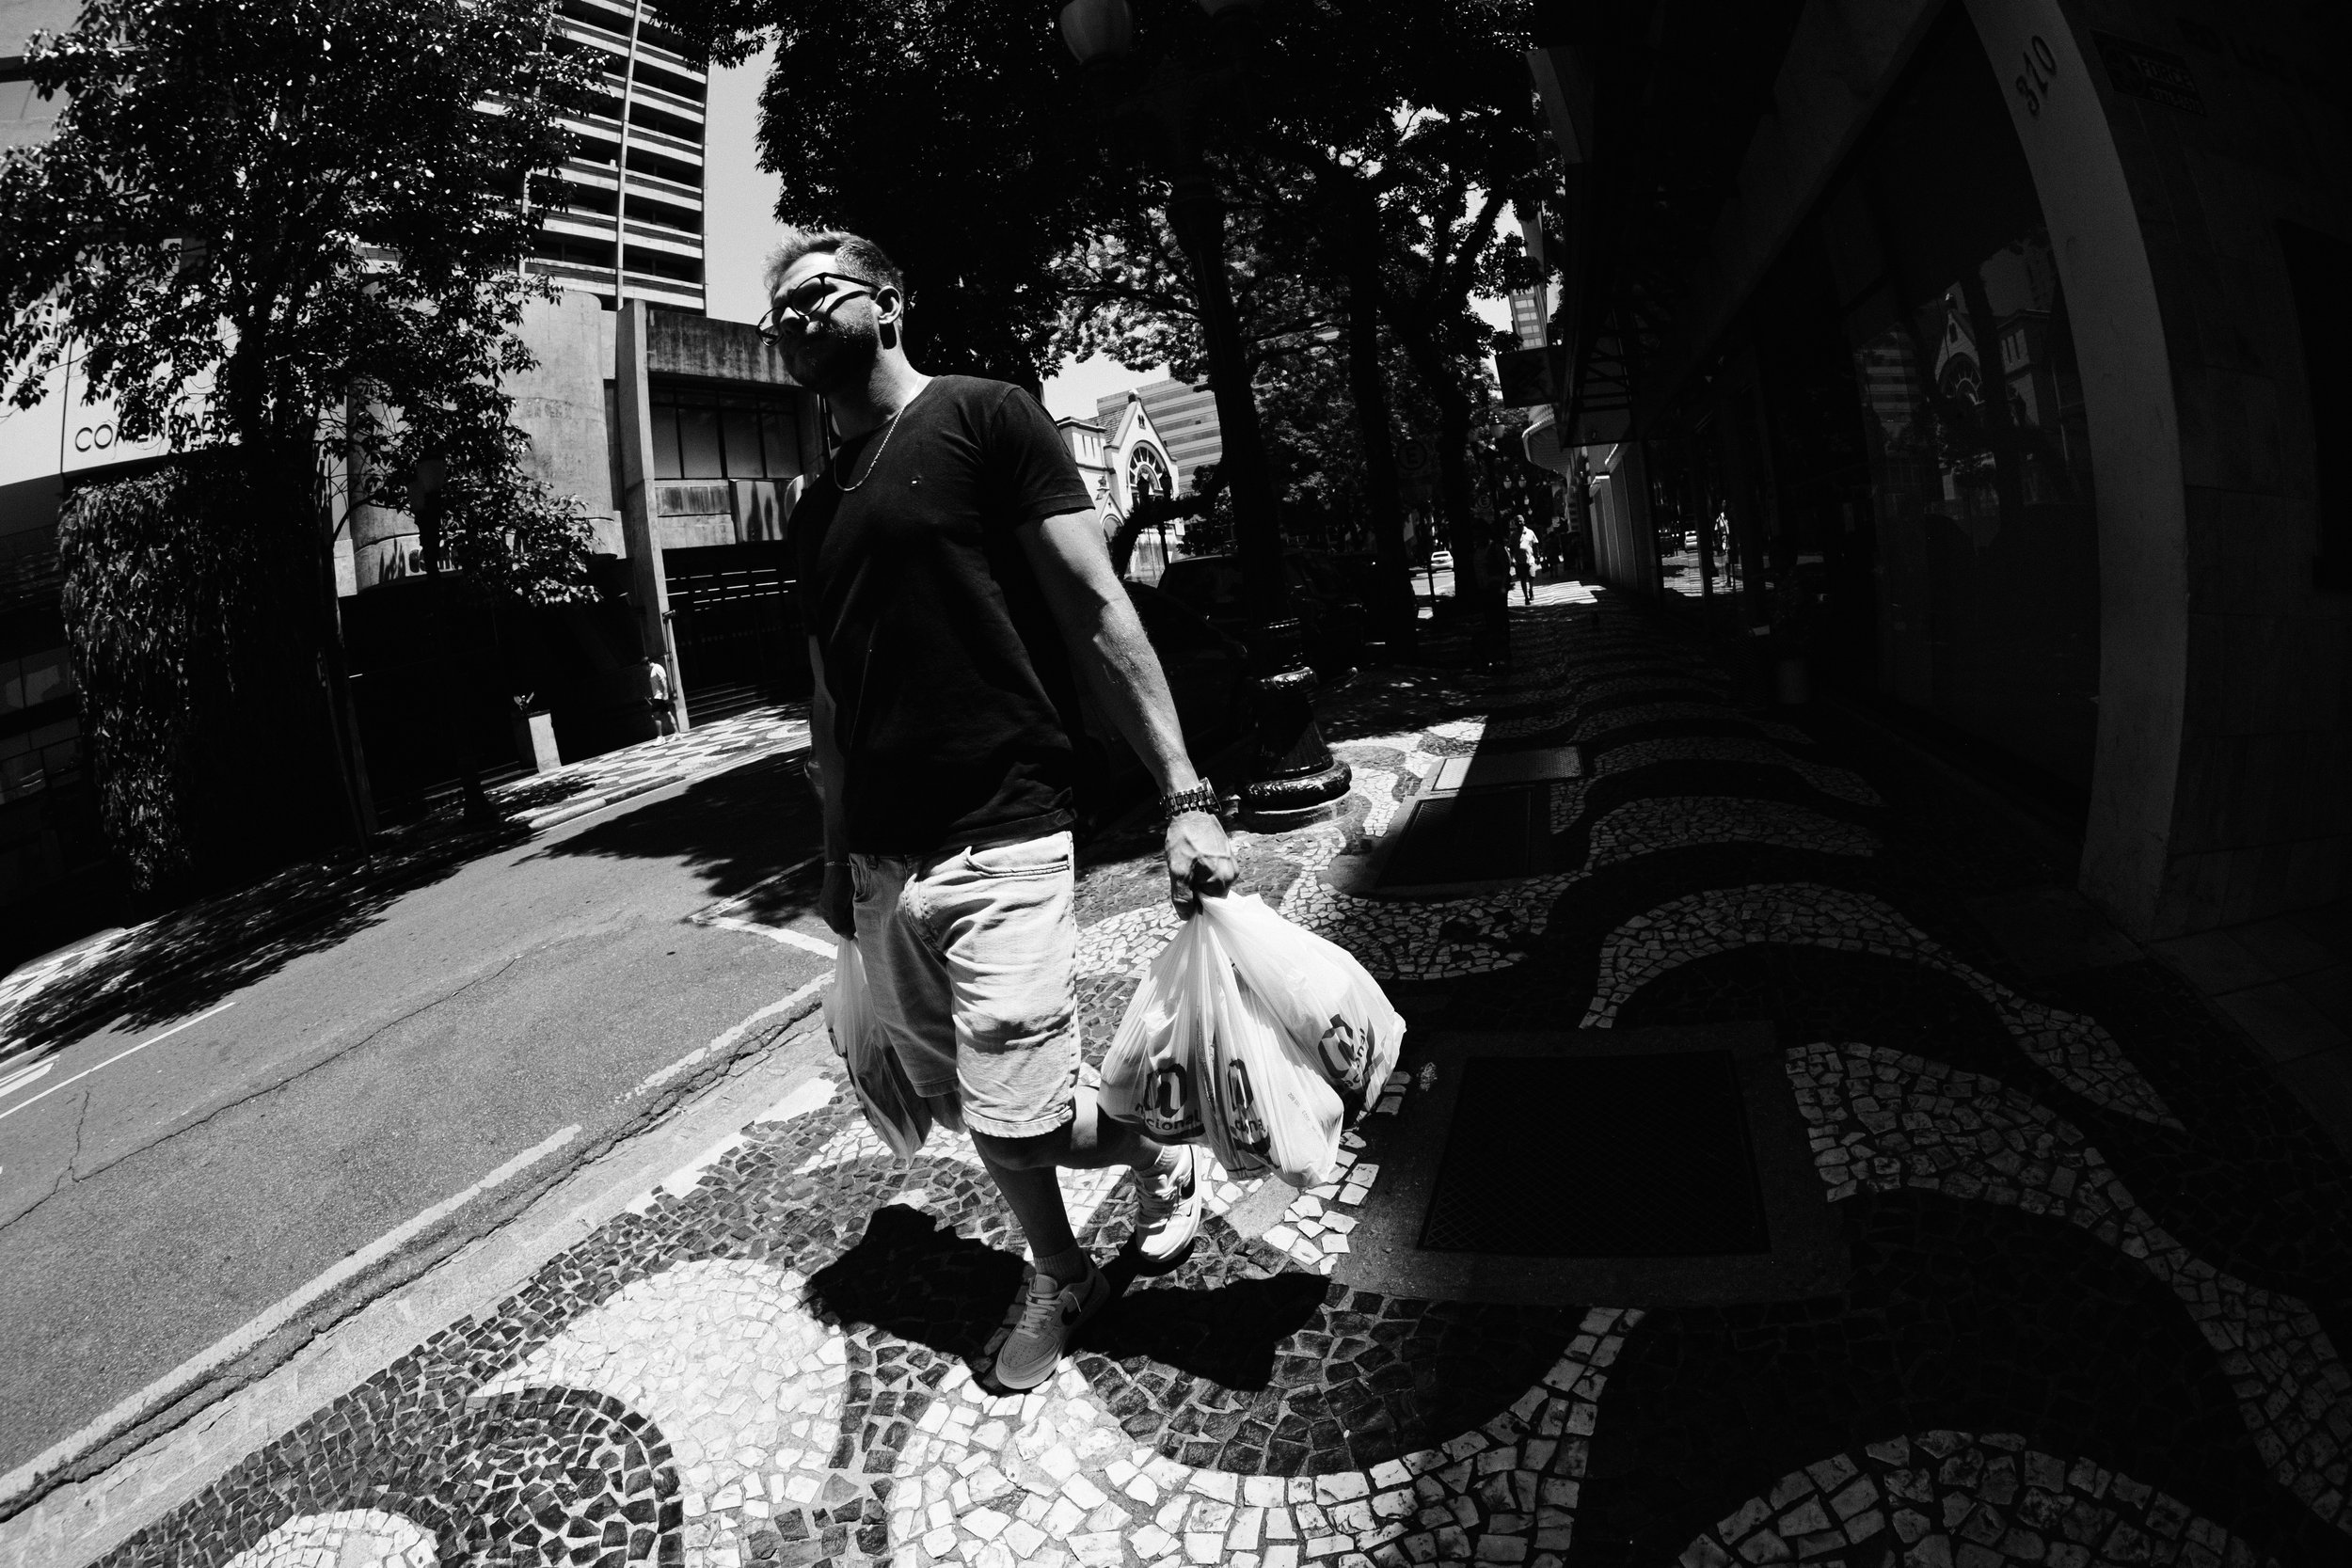 street-photography-with-fish-eye-lens-7-5mm-7artisans-fujifilm-x-t20-ricardo-franzen-68.jpg